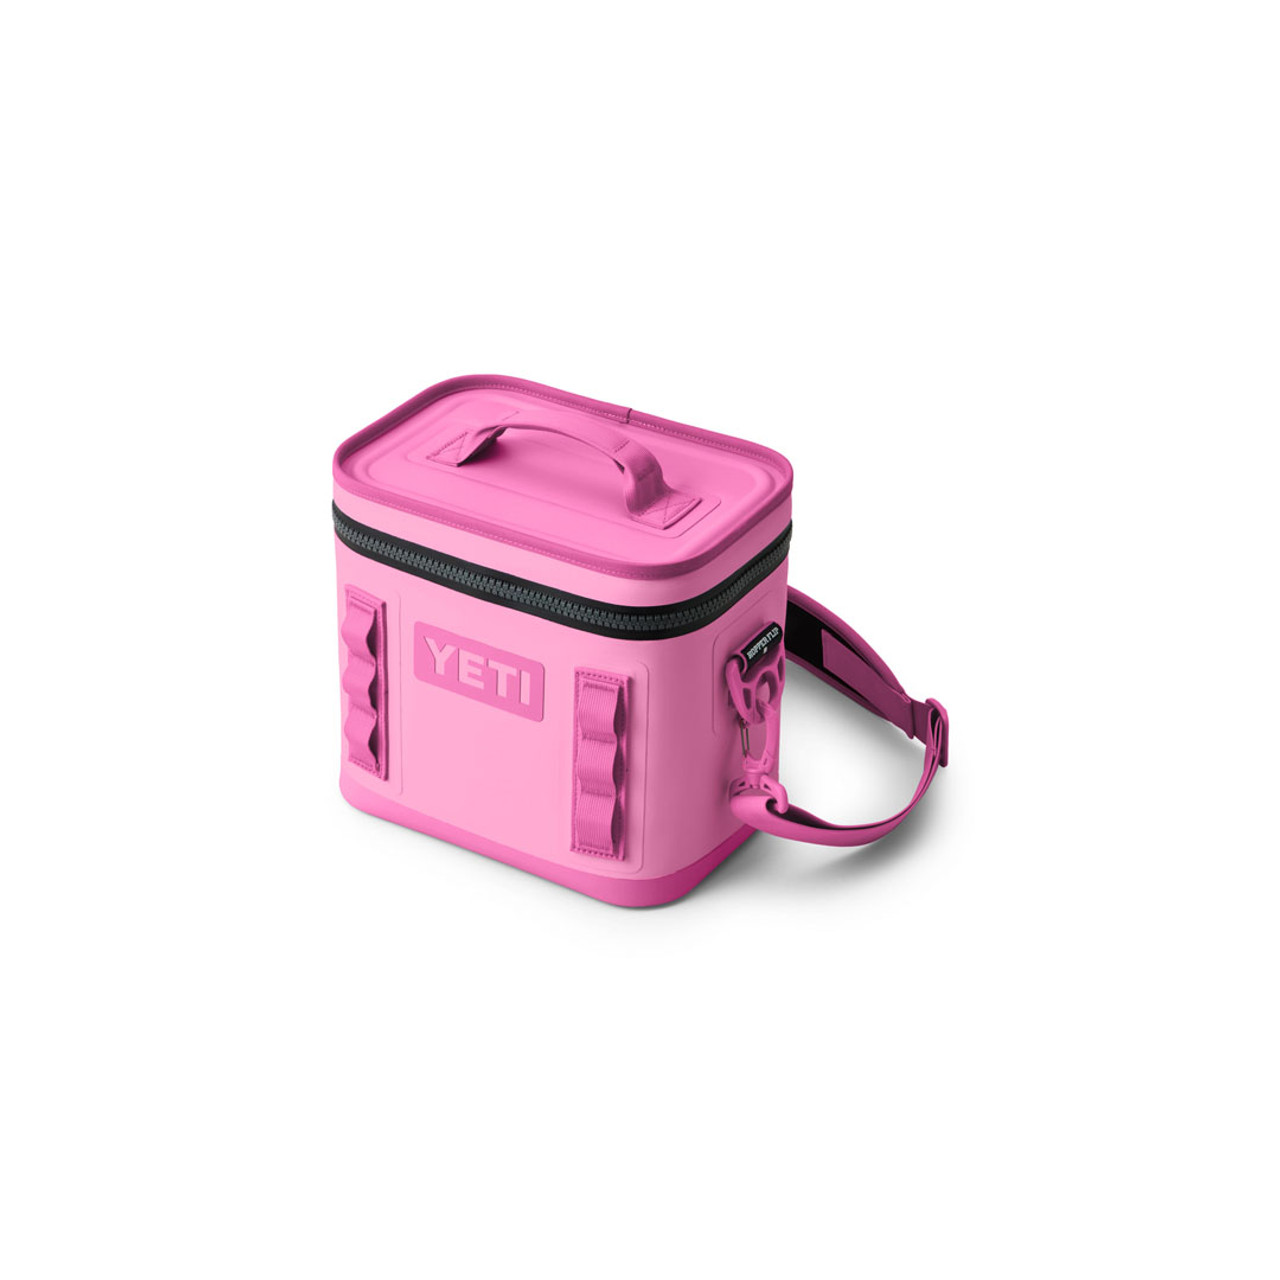 YETI Hopper Flip 12 Soft Cooler in Power Pink